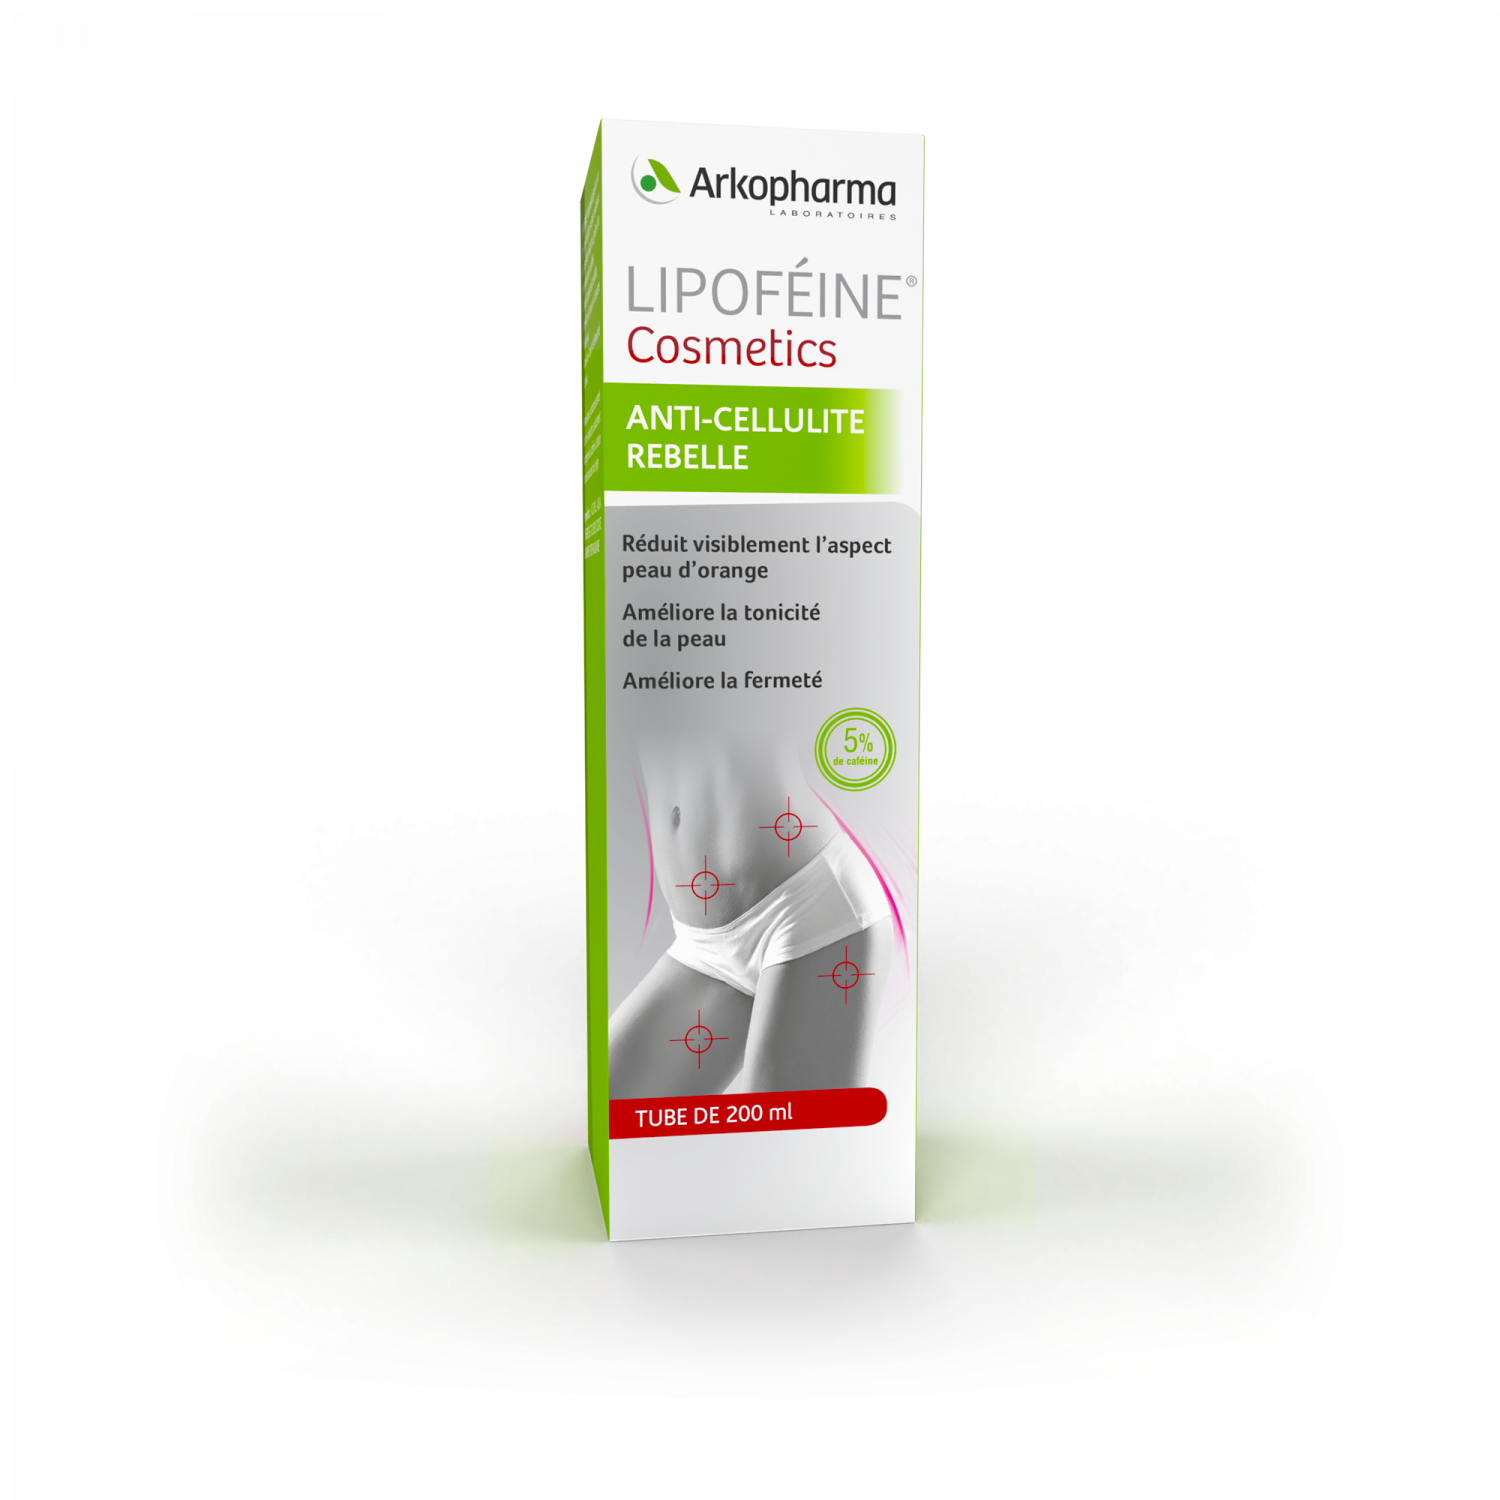 Lipoféine Cosmetics anti-cellulite rebelle Arkopharma - tube de 200 ml